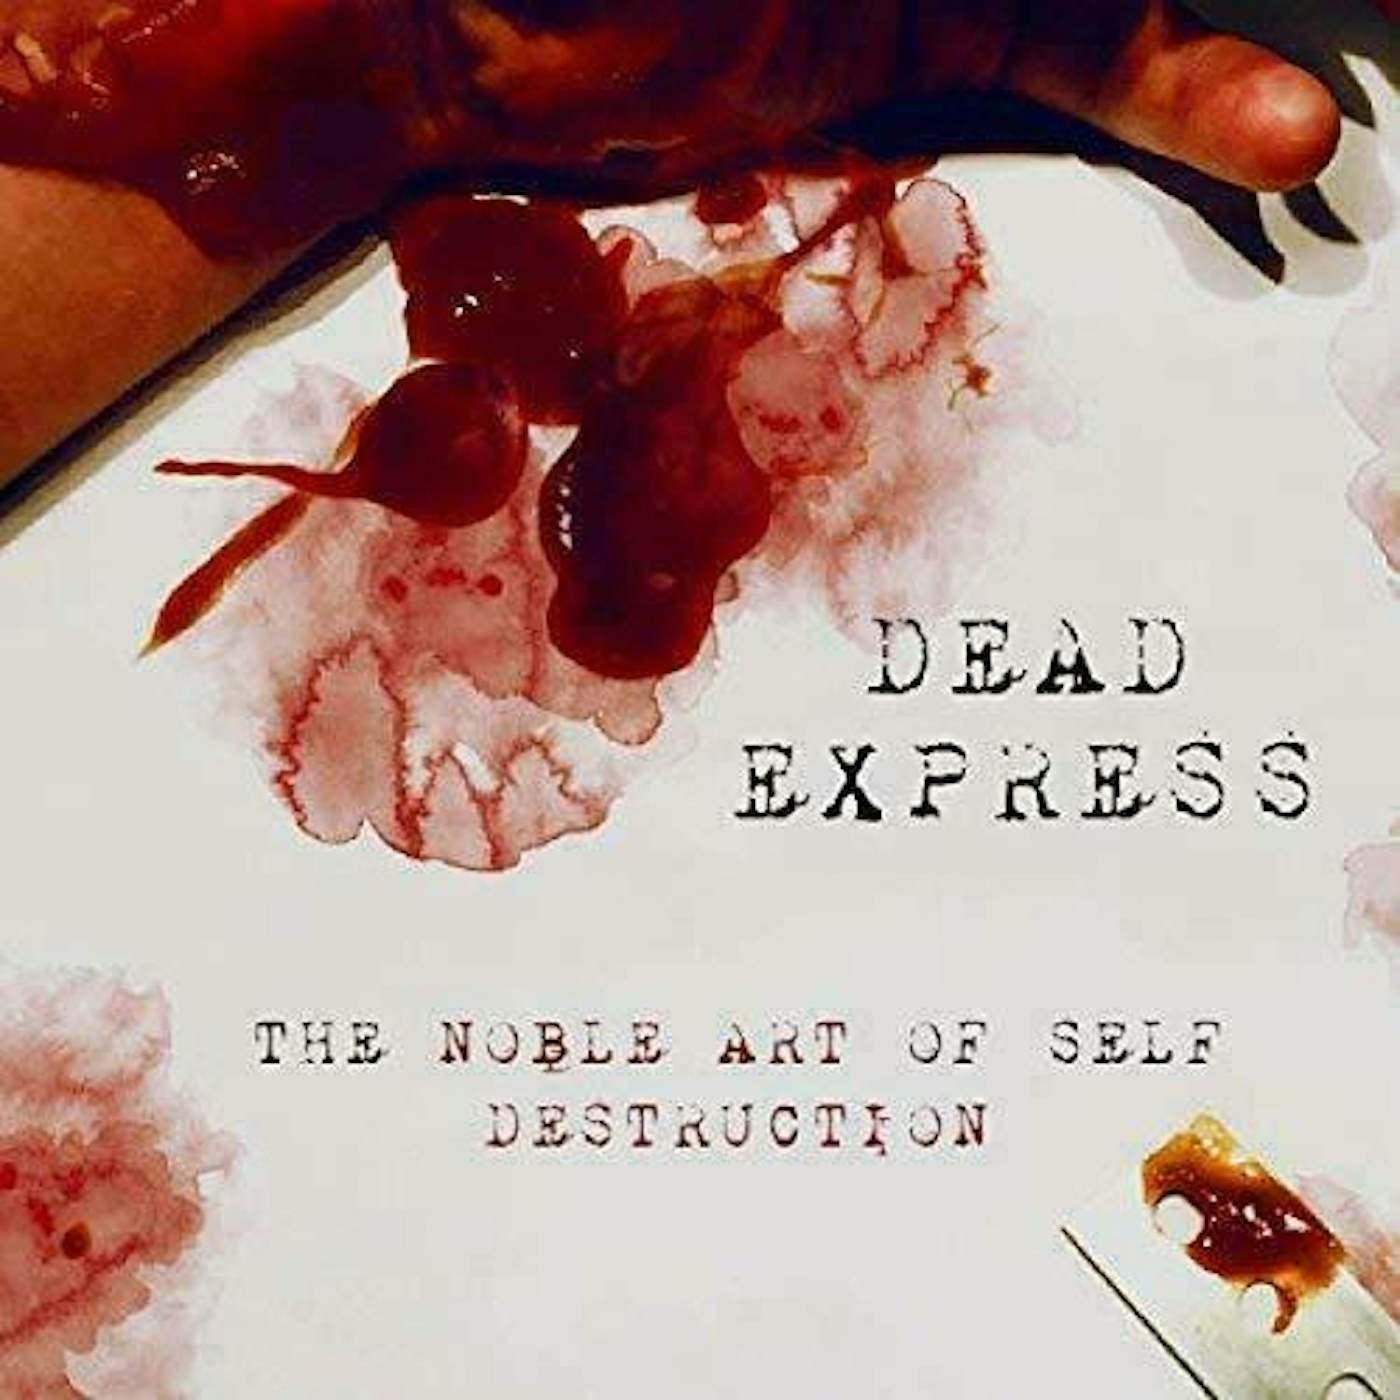 Dead Express The Noble Art Of Self Destruction Vinyl Record